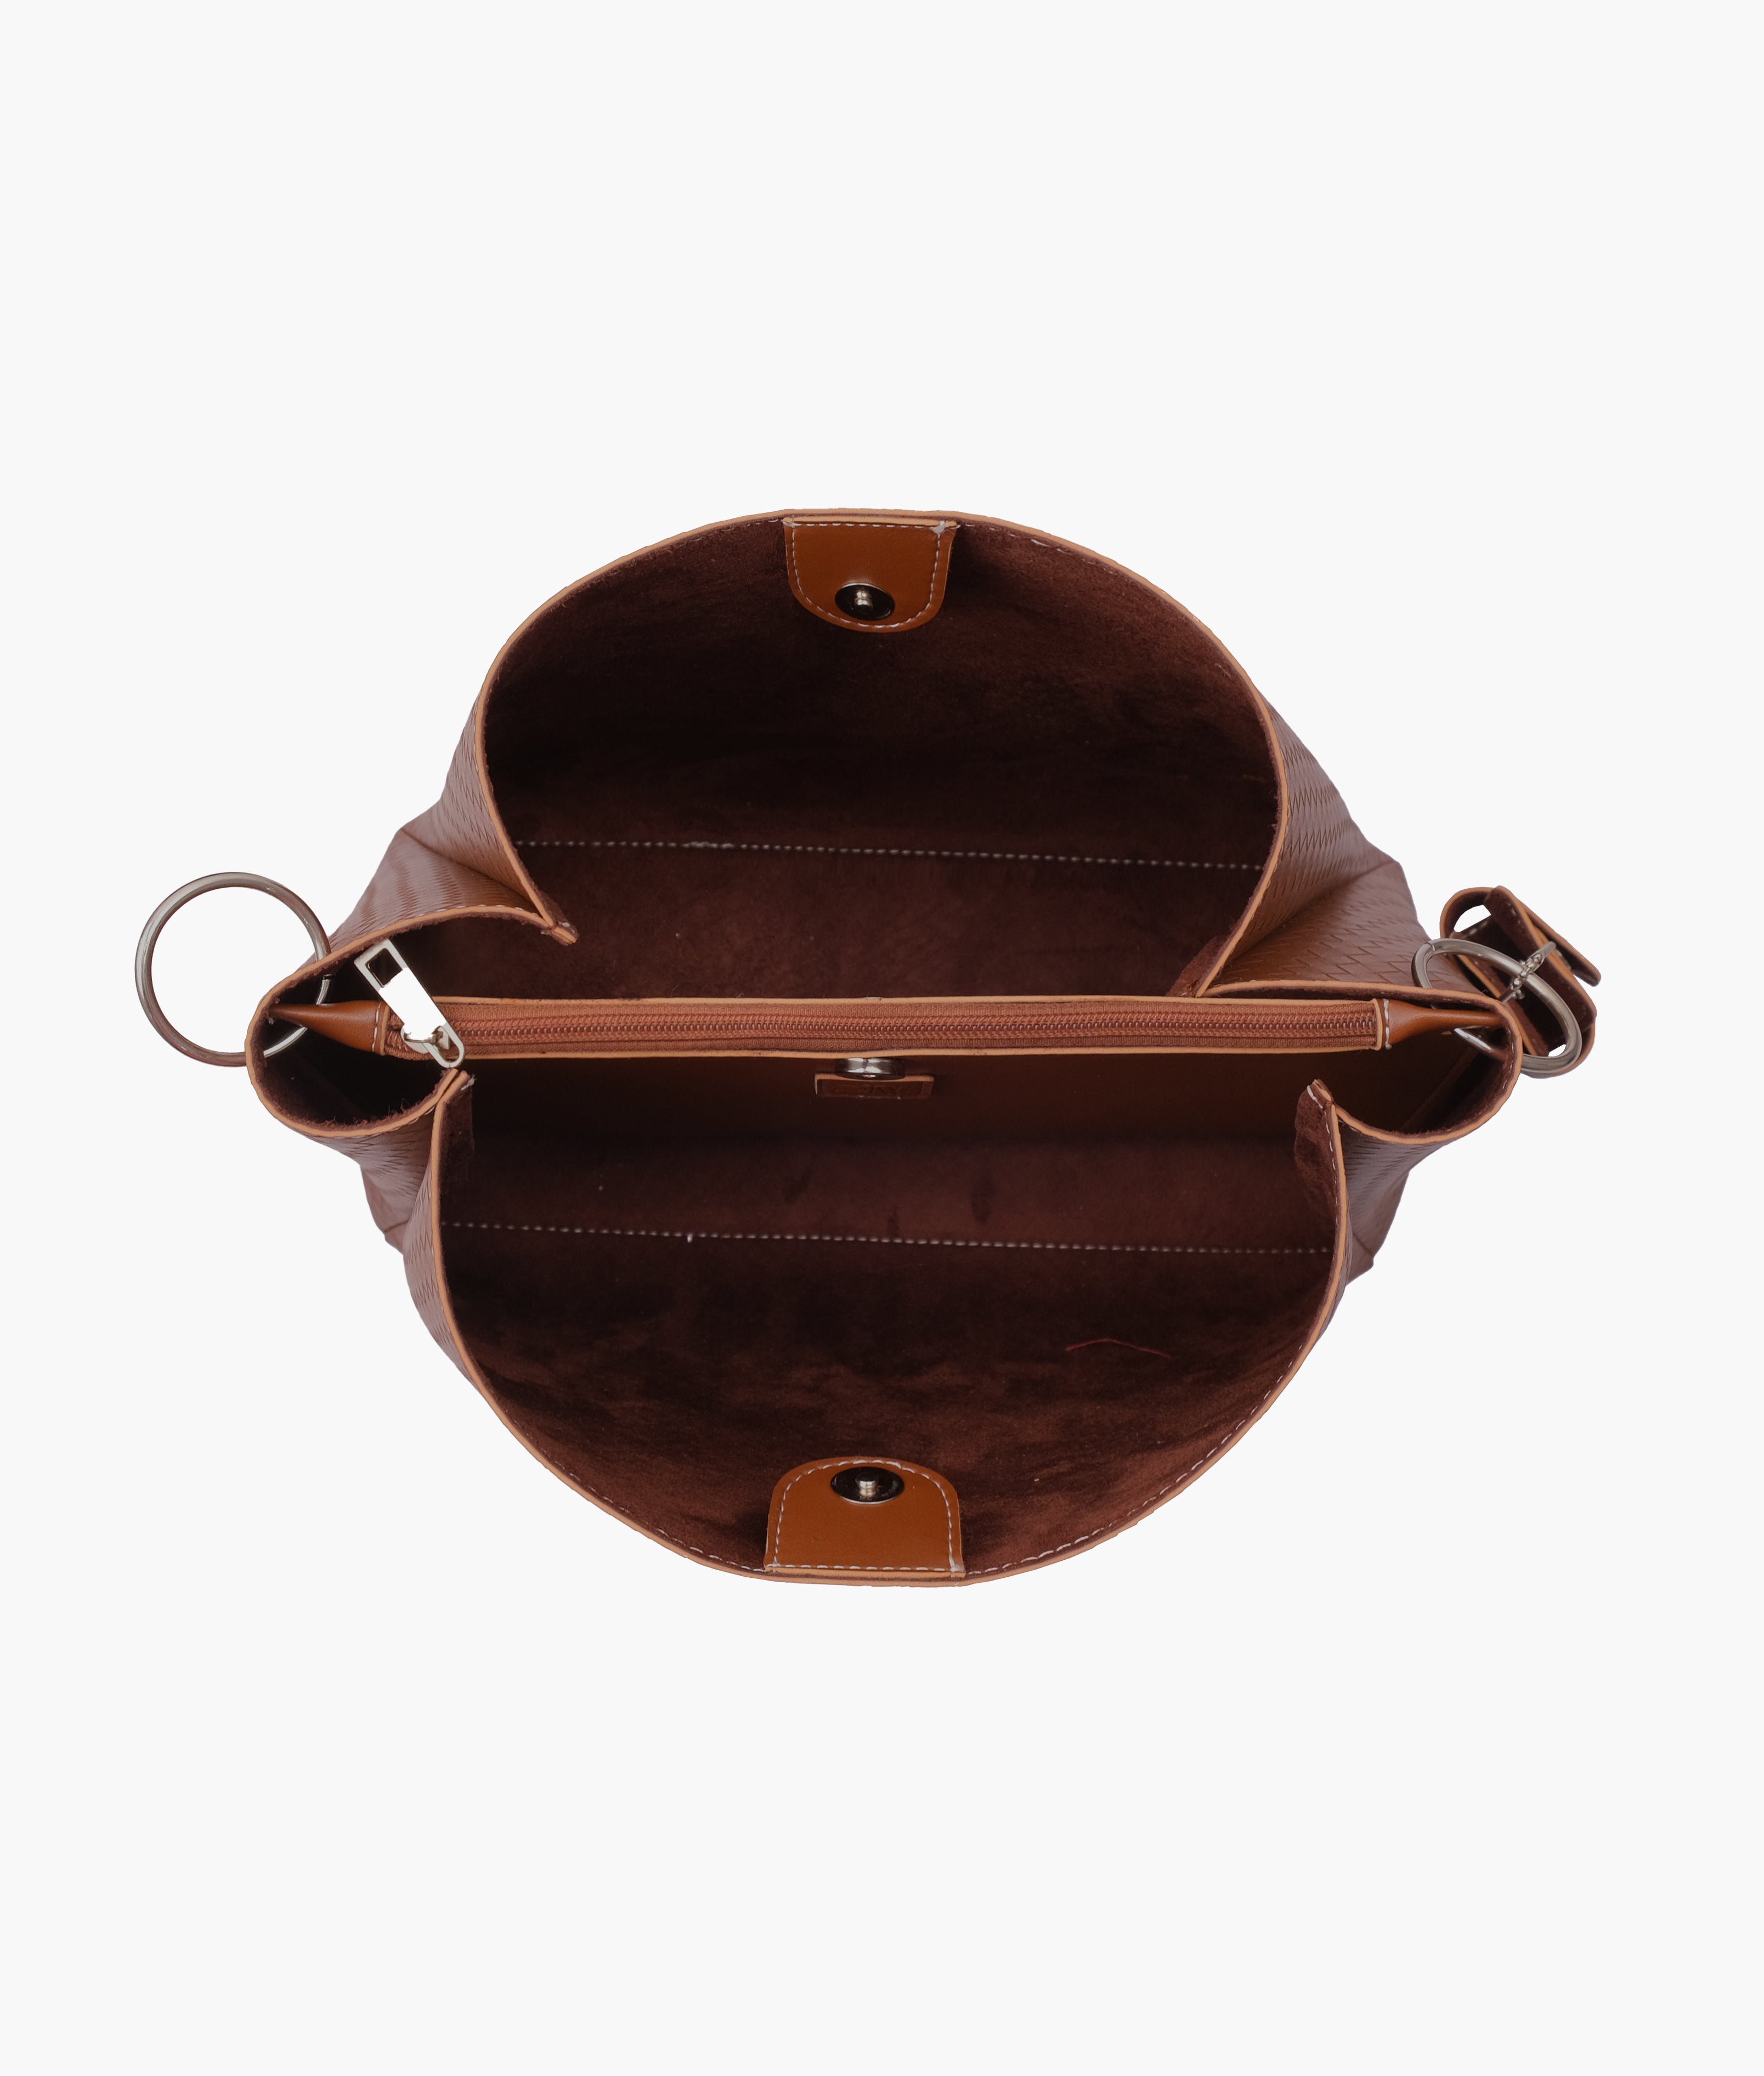 Brown weaved handbag with braided handle